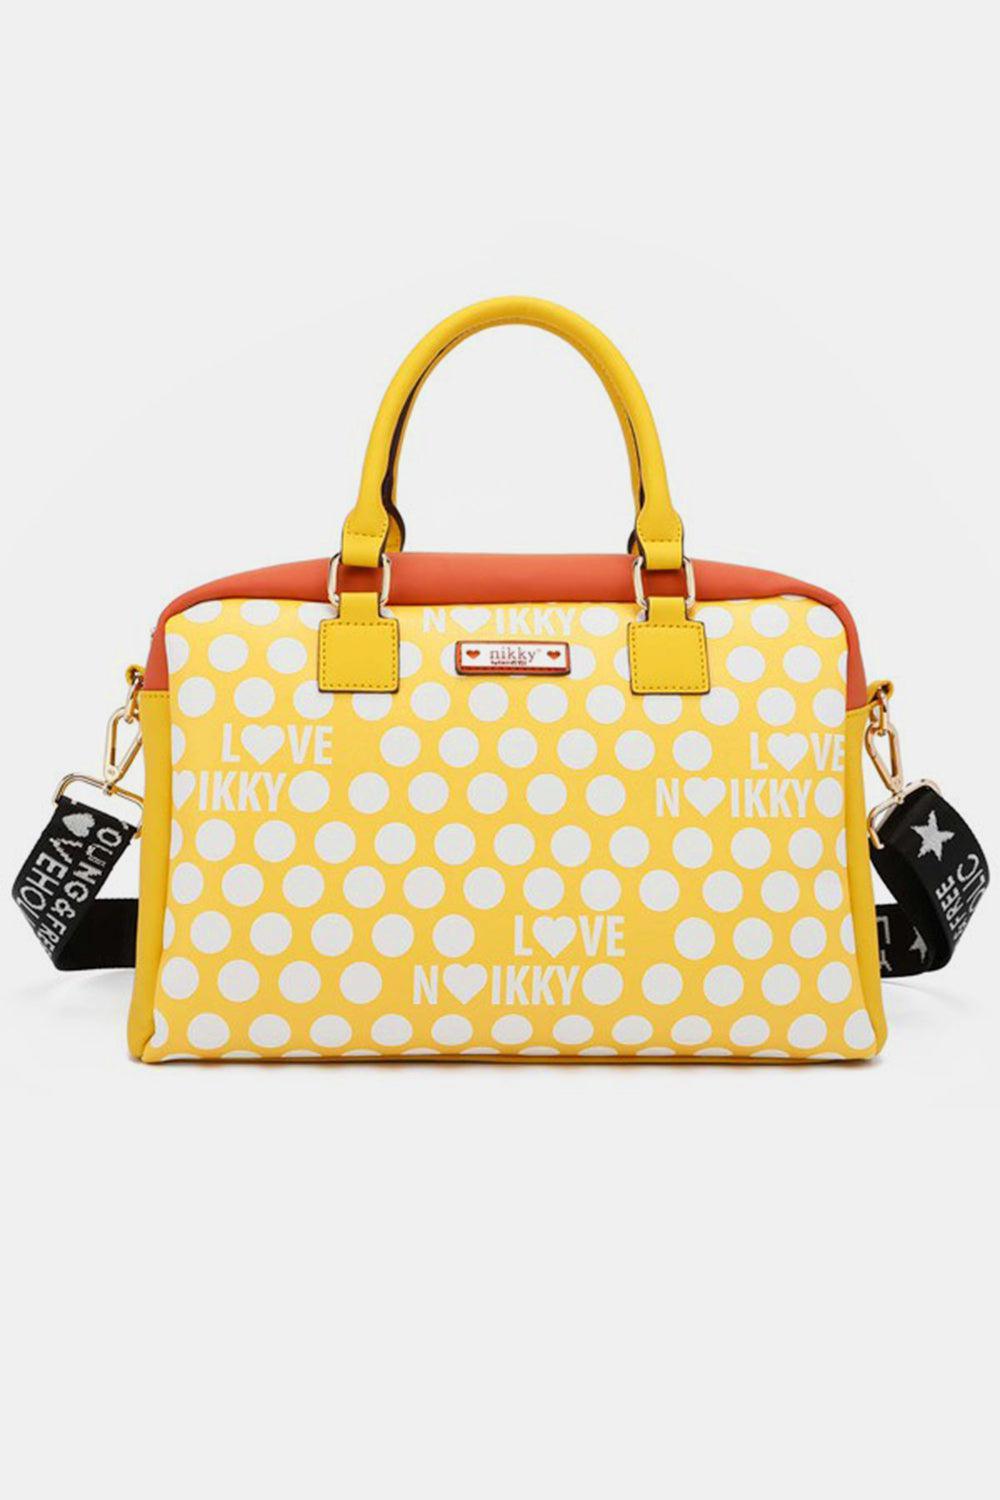 a yellow and white polka dot purse